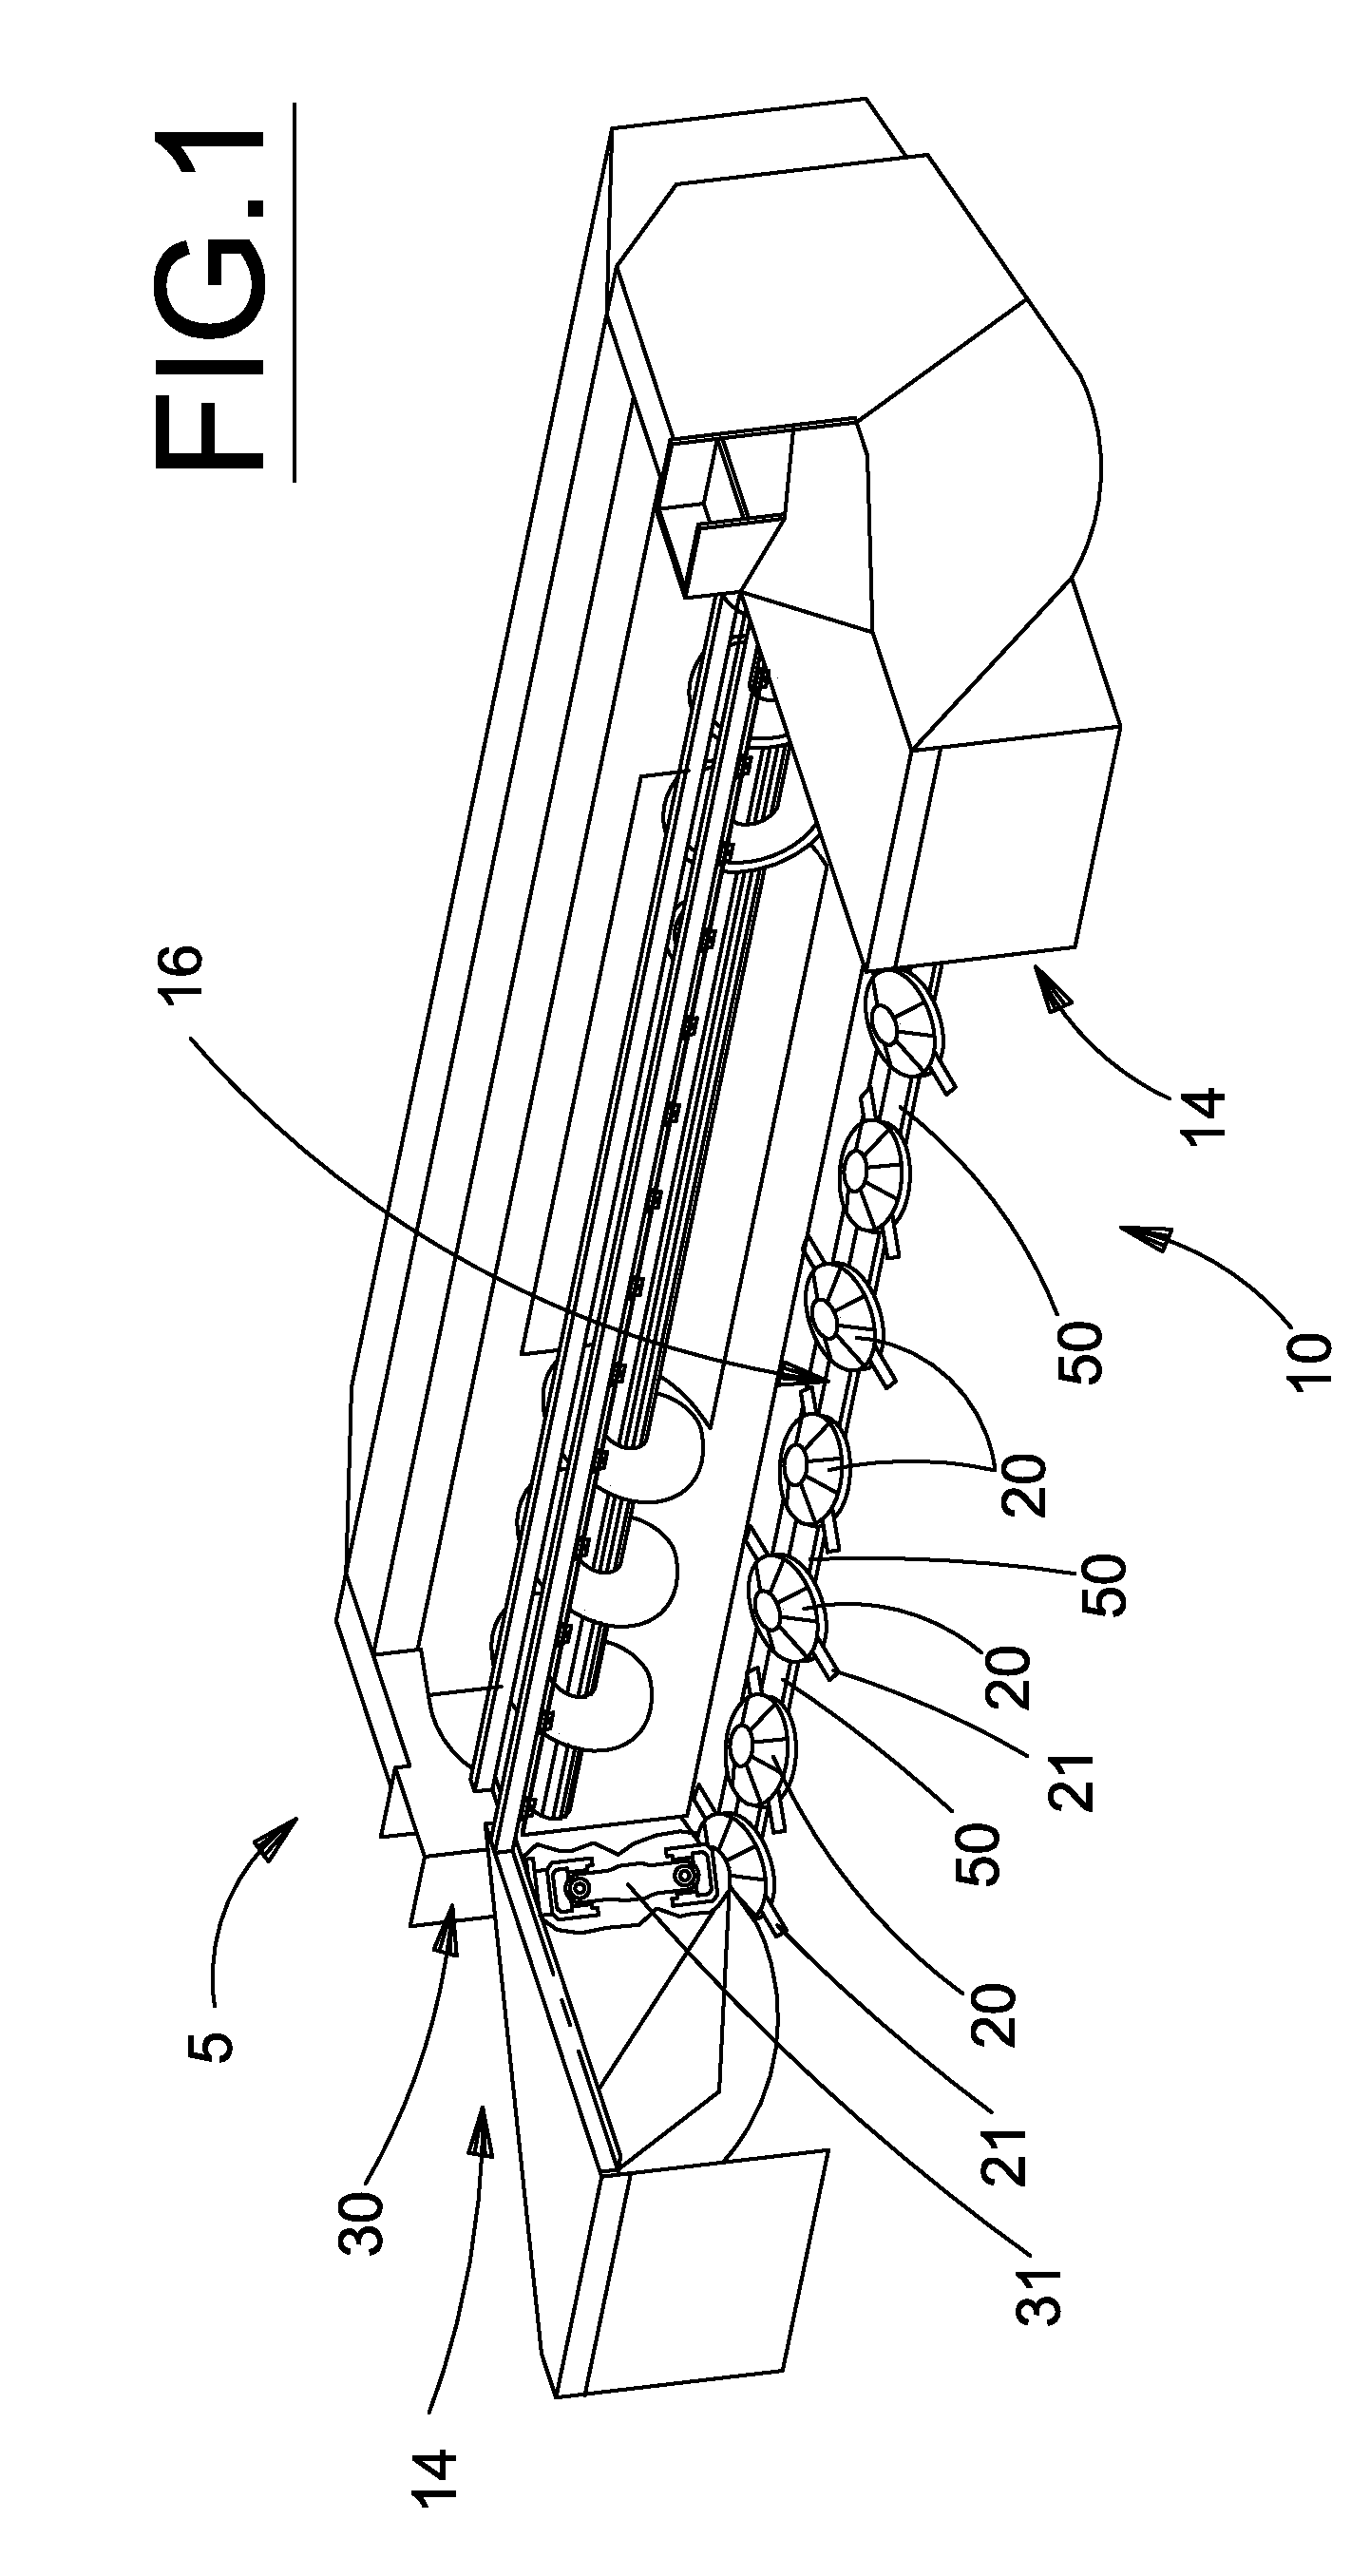 Modular disc cutterbar